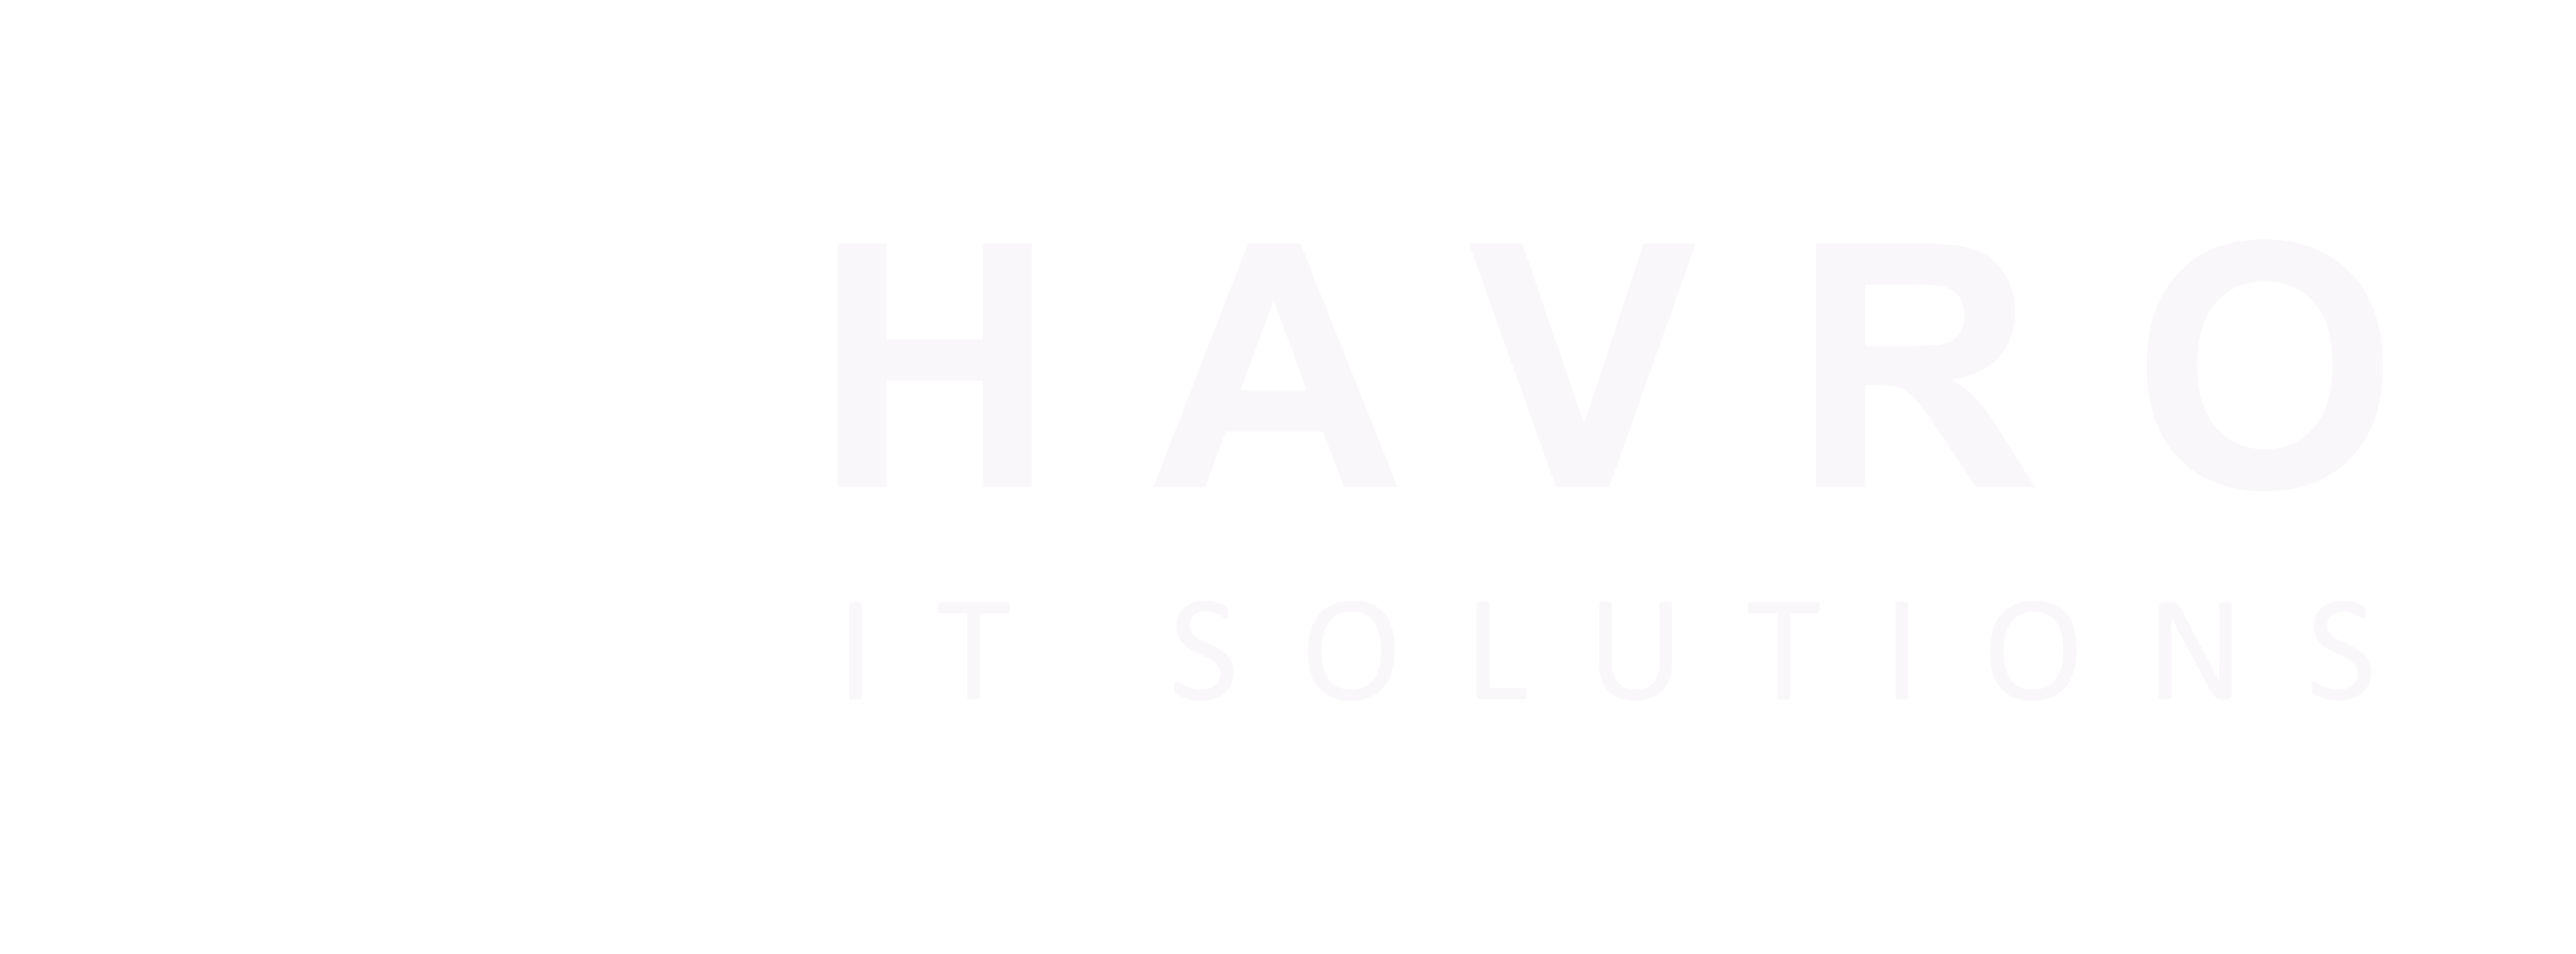 Havro IT Solutions - Best web development company